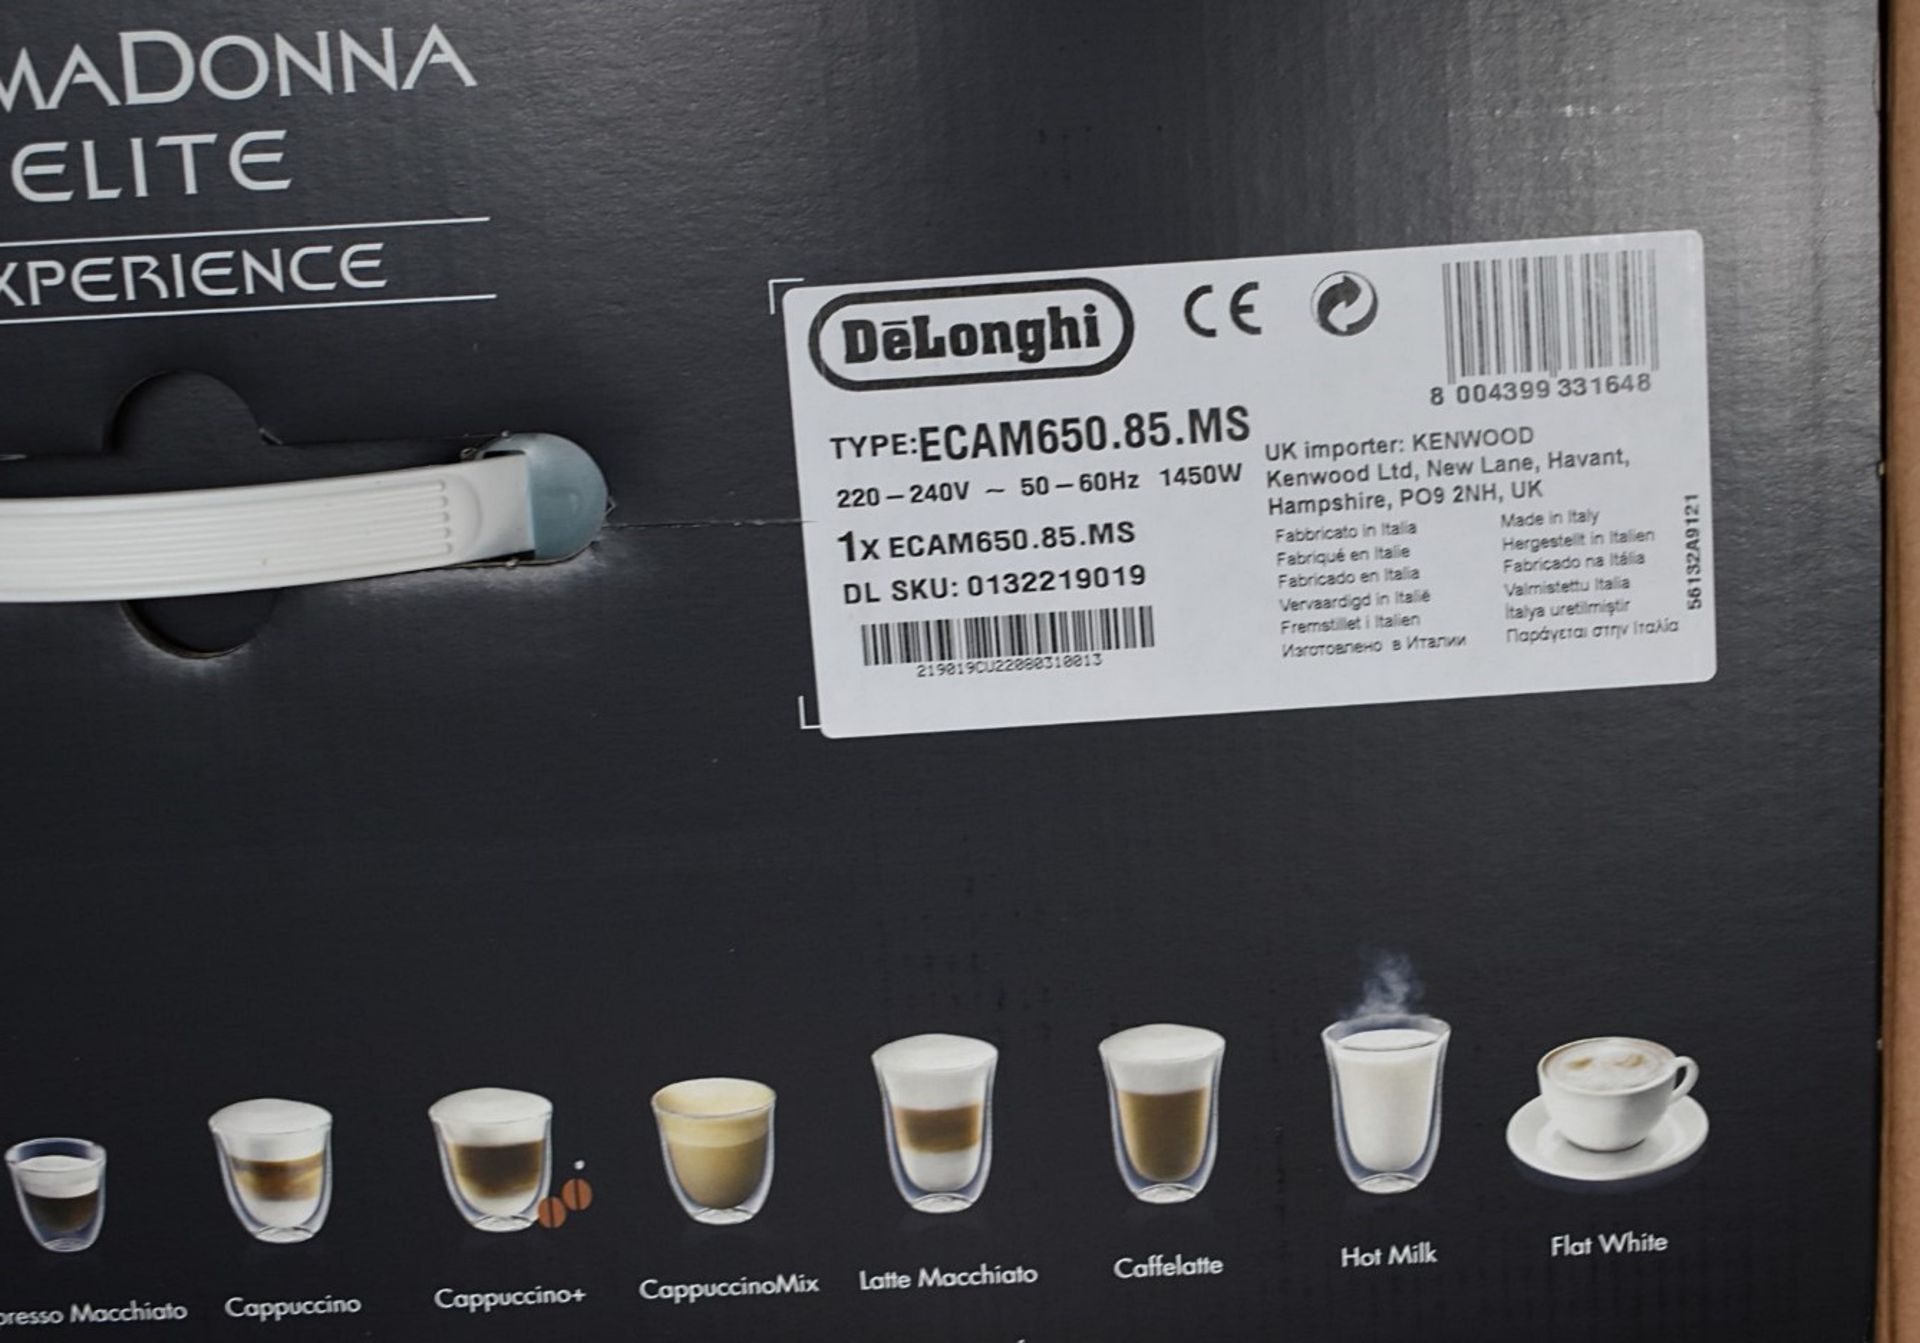 1 x DE'LONGHI PrimaDonna Elite Experience Coffee Maker - Original Price £1,999 - Unused Boxed - Image 8 of 24